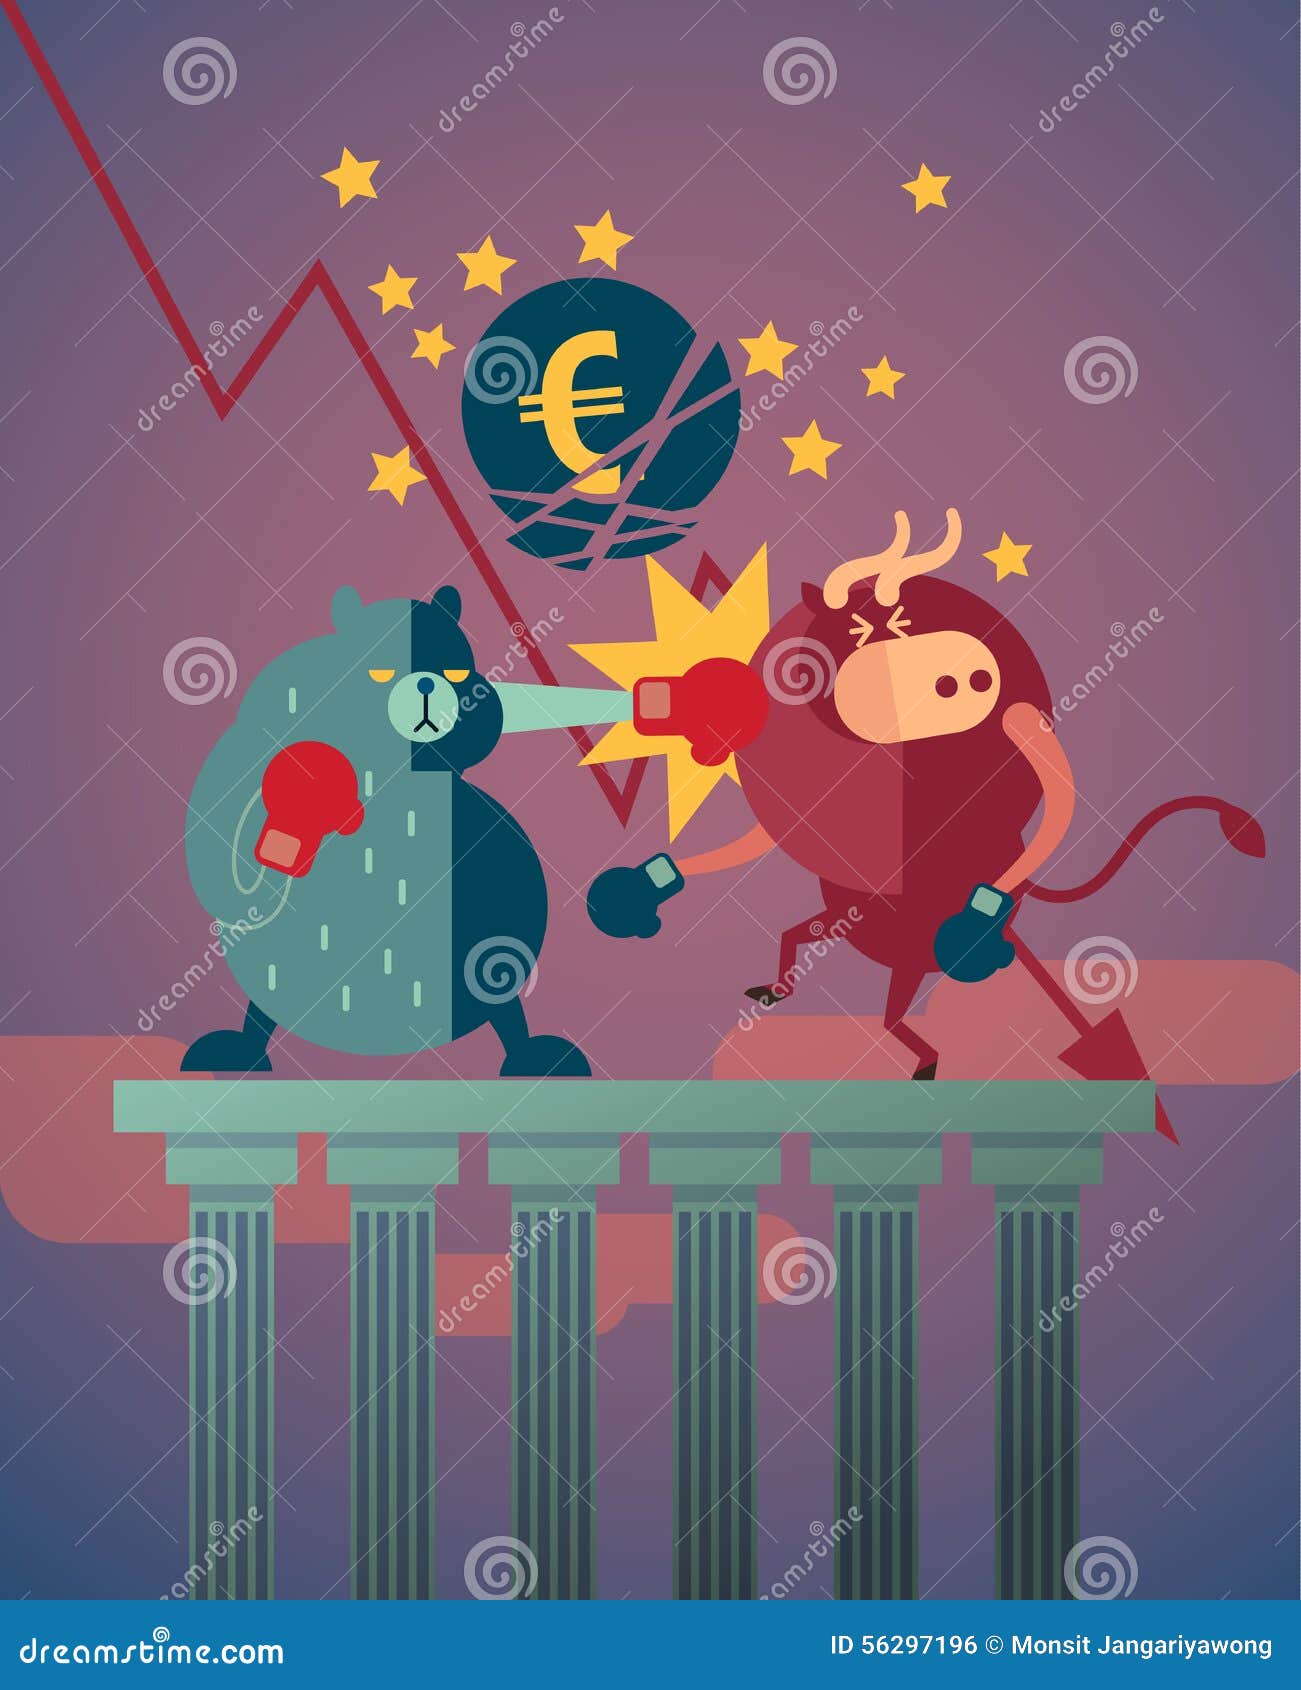 effect of euro crisis on stock market